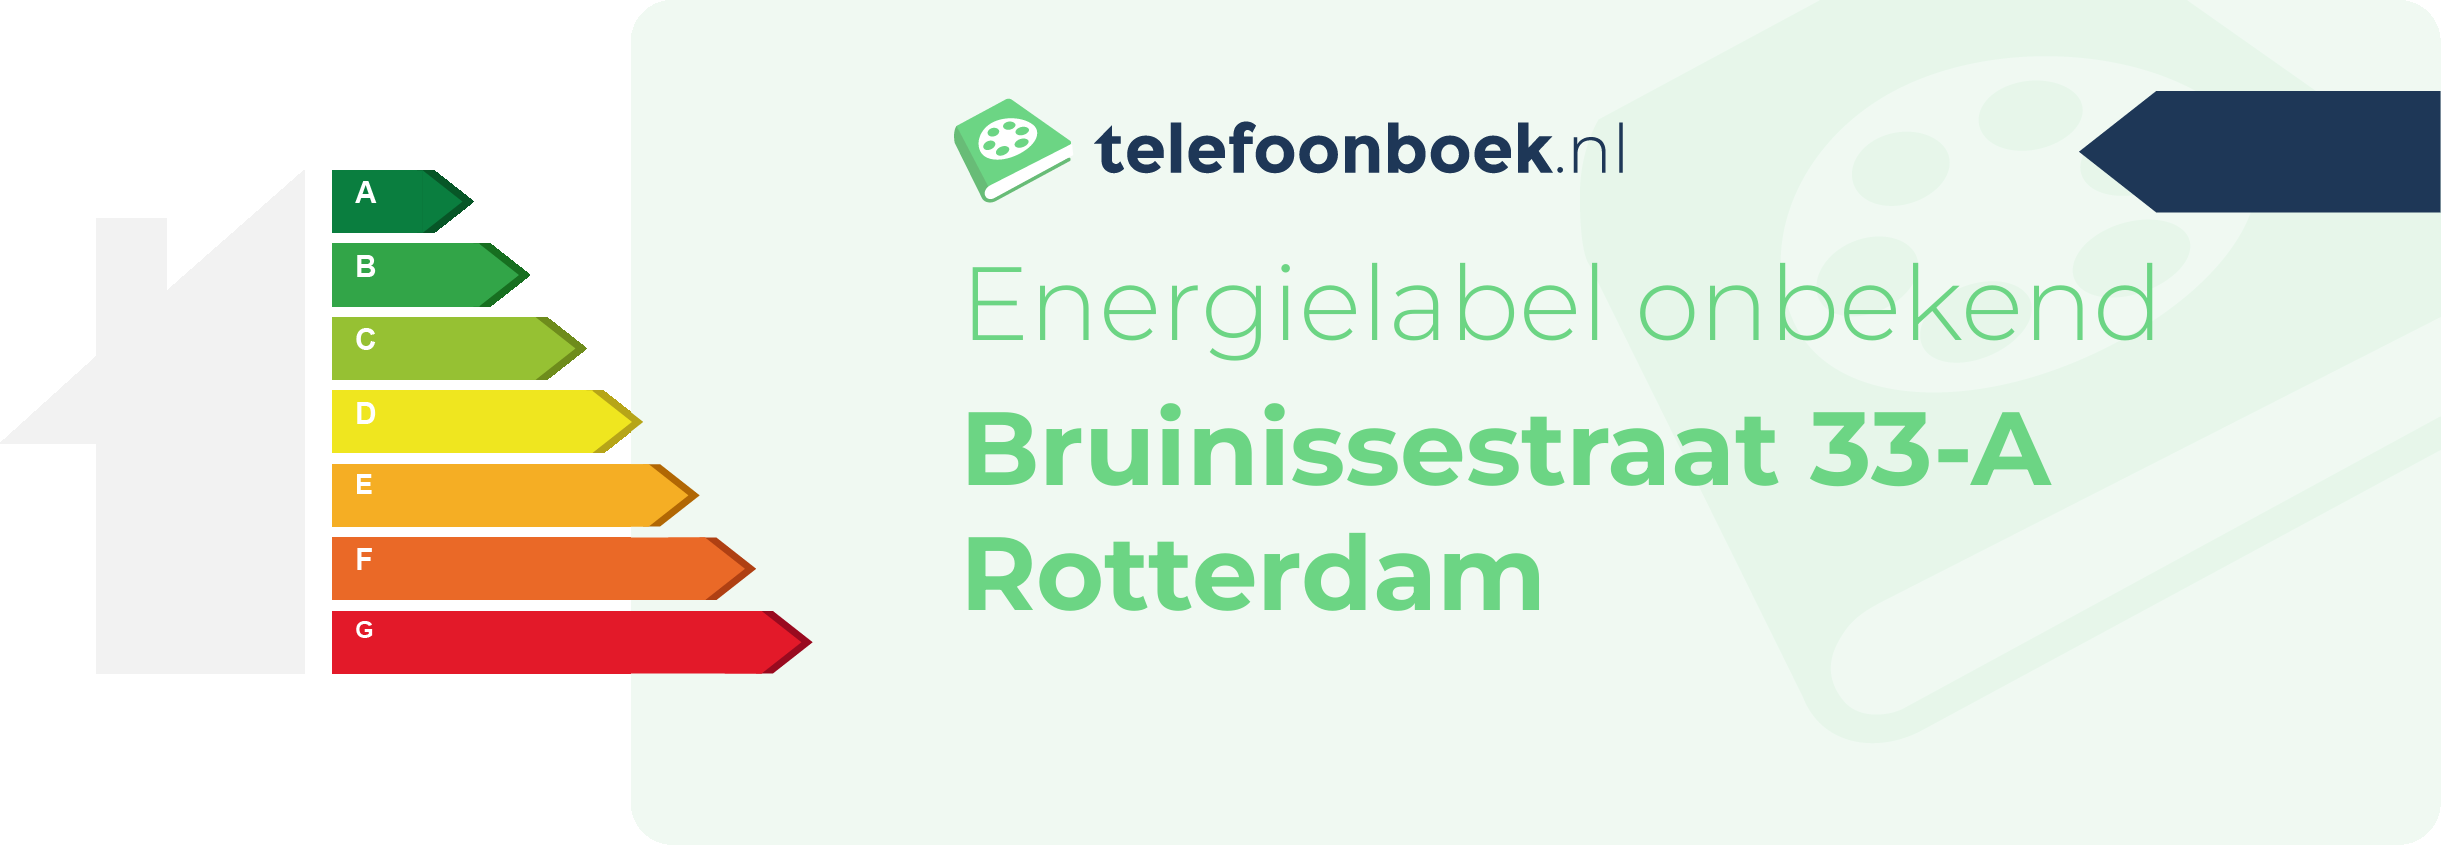 Energielabel Bruinissestraat 33-A Rotterdam